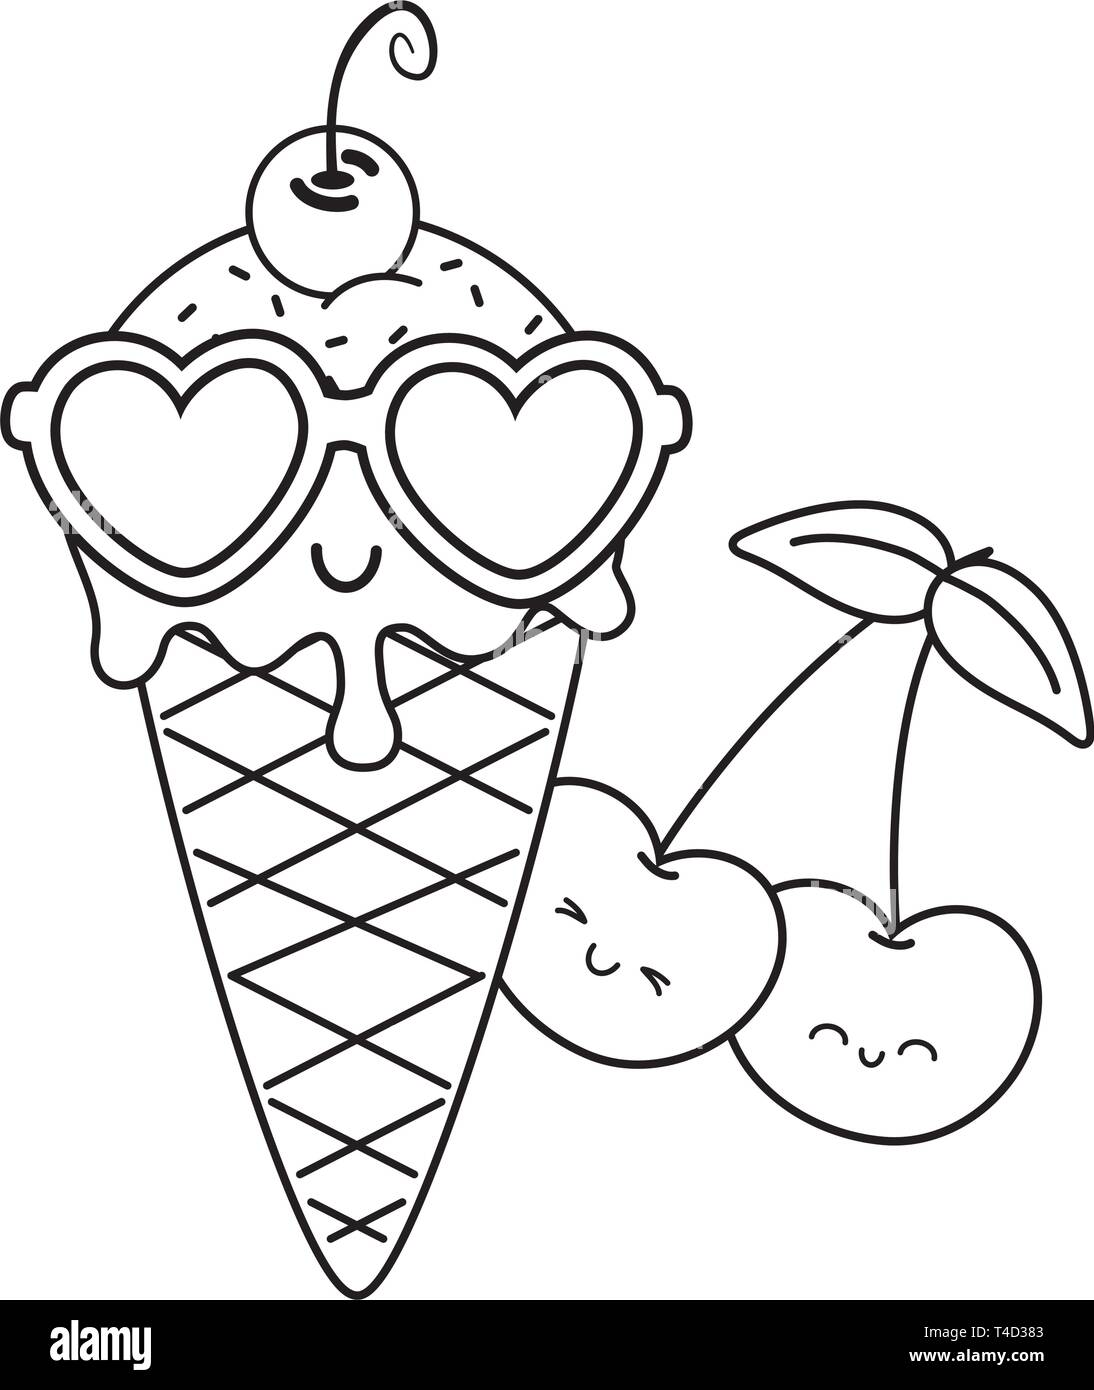 ice cream cherries and sunglasses icon cartoon black and white vector illustration graphic design Stock Vector